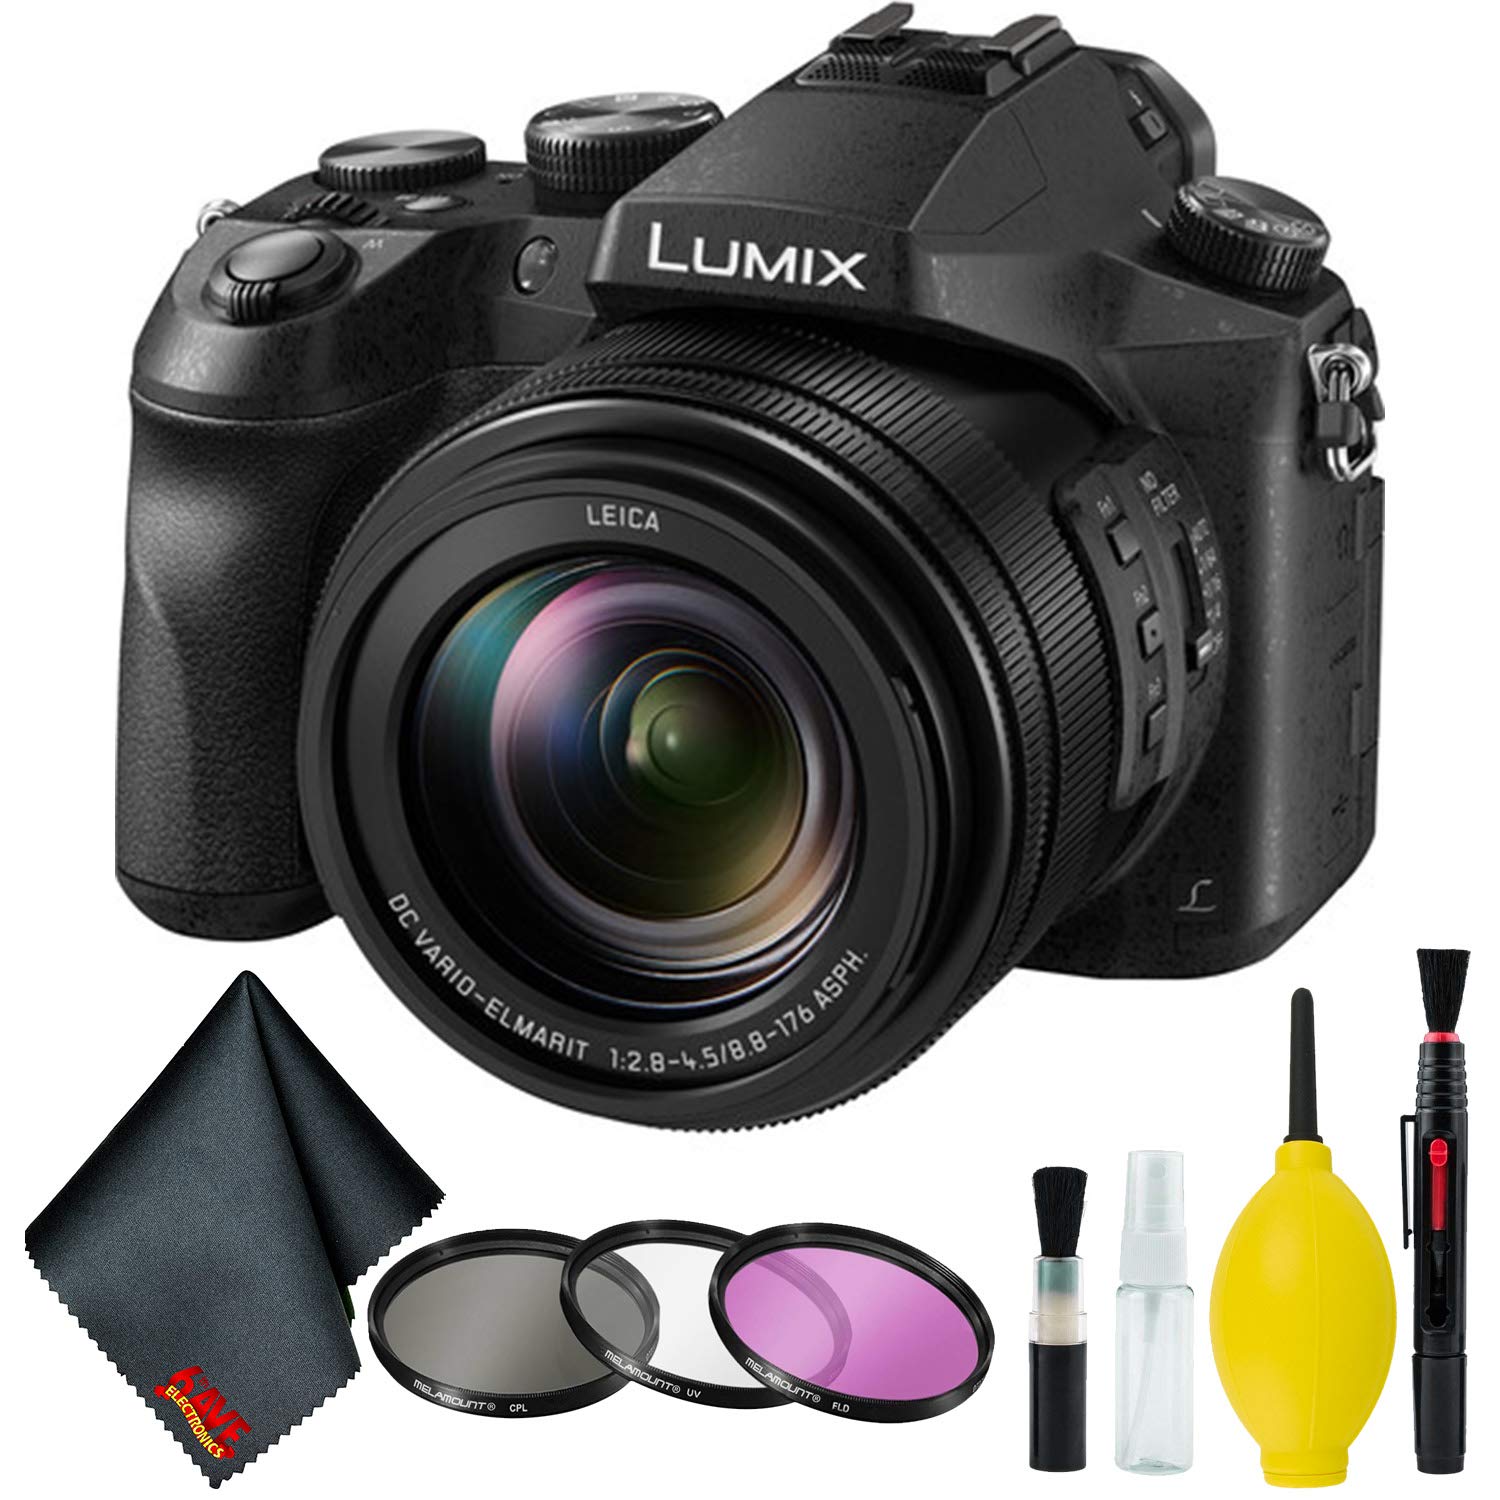 Panasonic Lumix DMC-FZ2500 Digital Camera w/Filter Kit